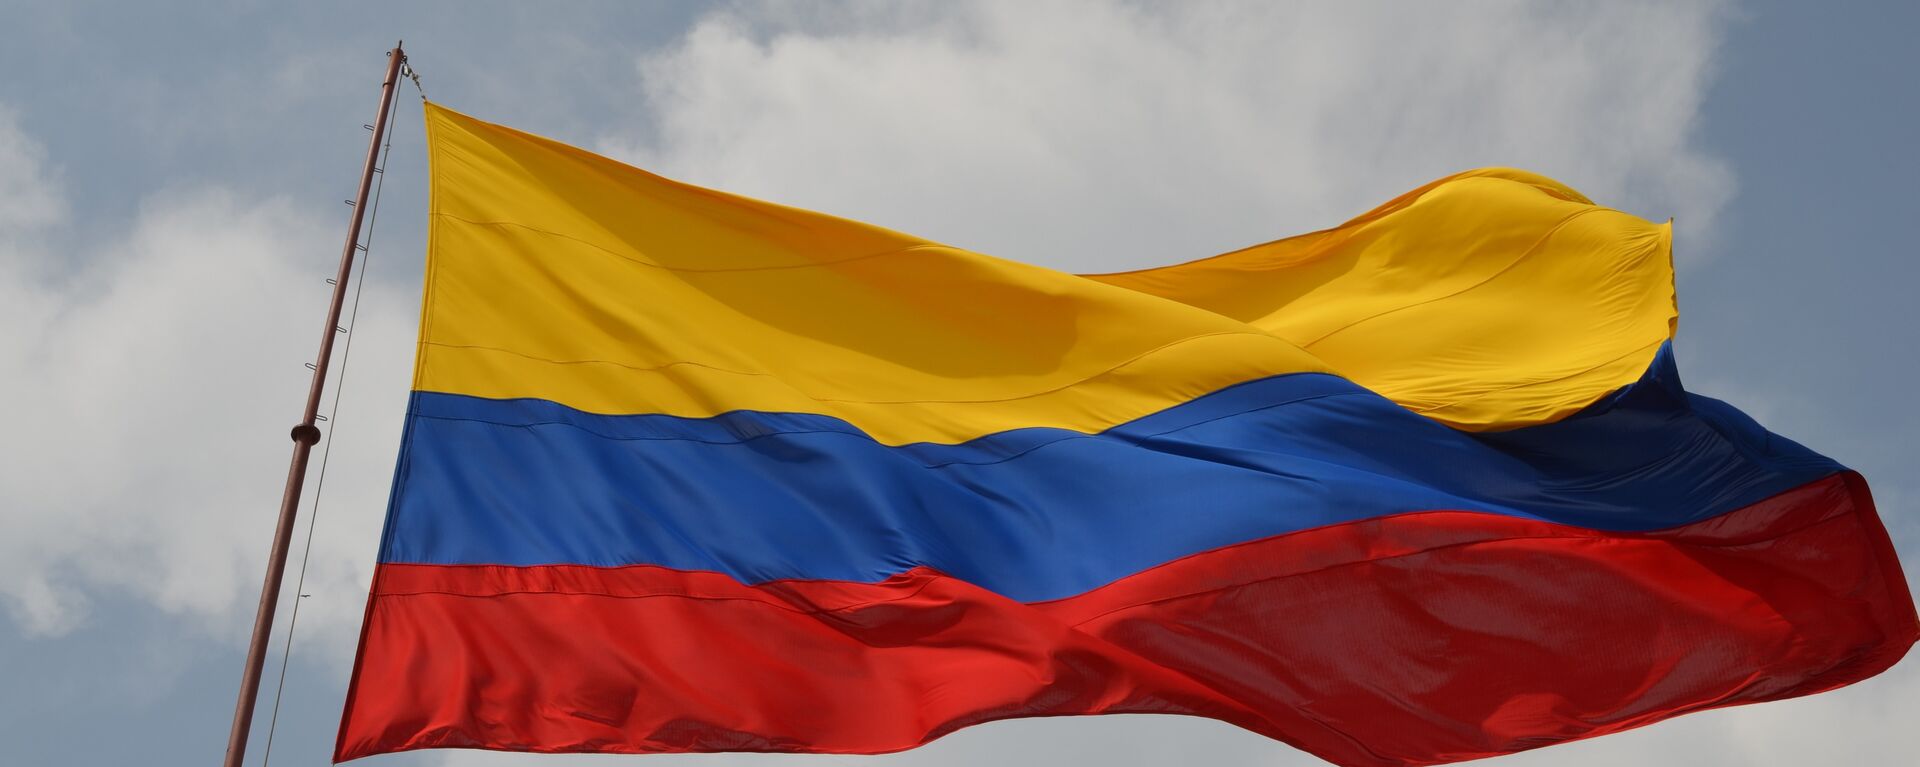 Bandera de Colombia - Sputnik Mundo, 1920, 11.03.2022